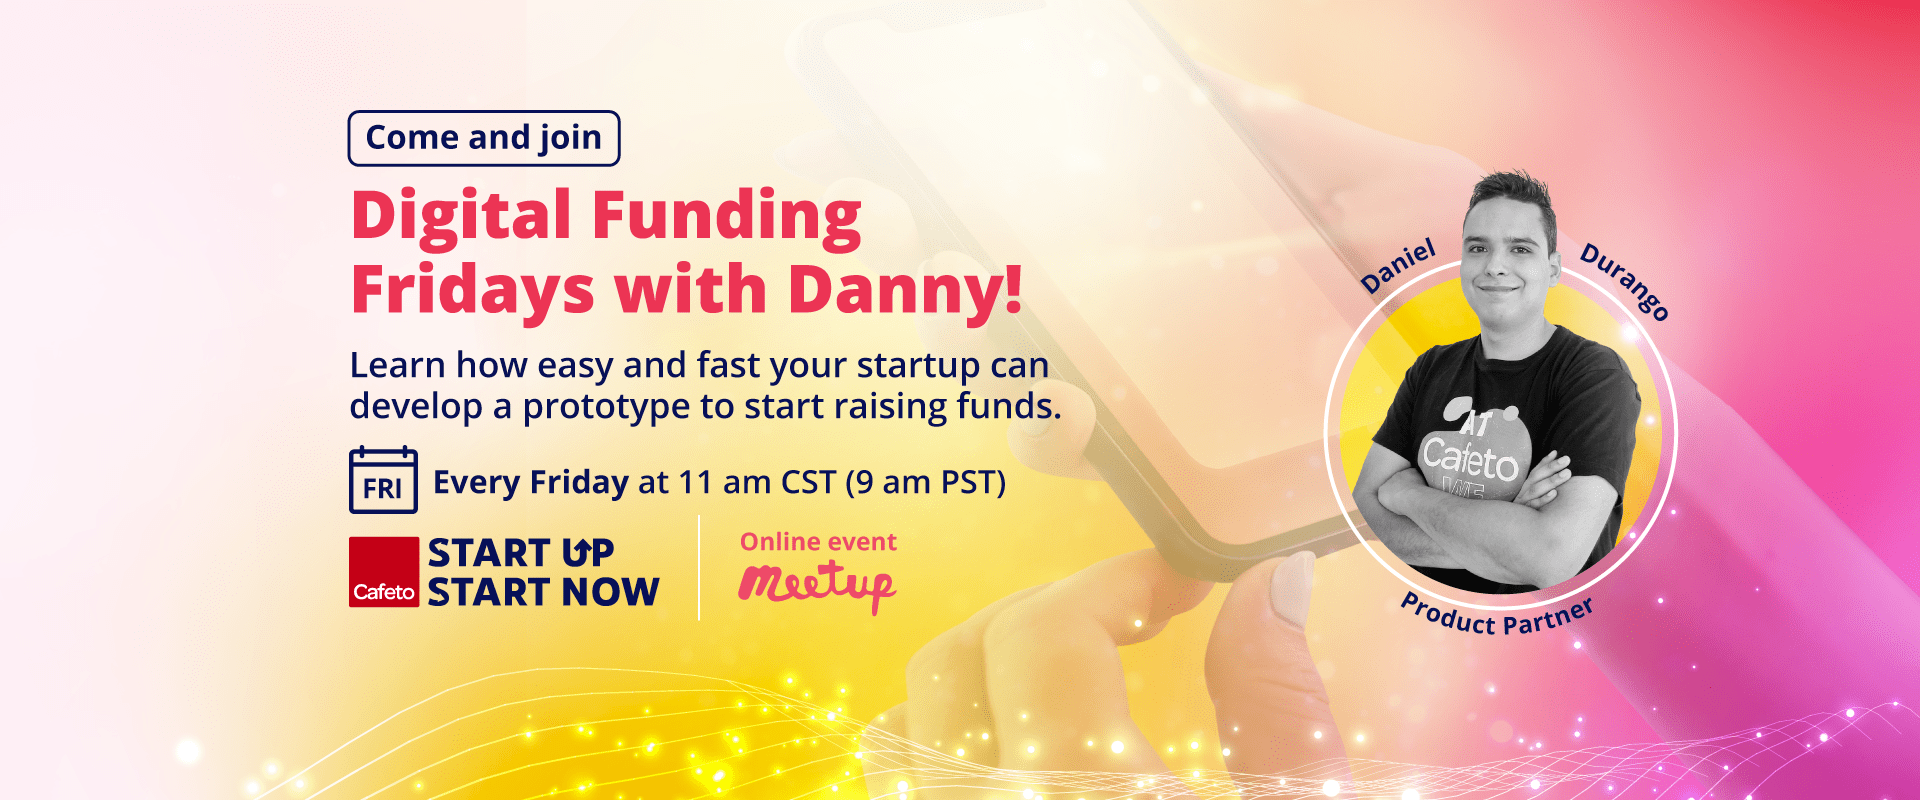 Digital Funding Fridays with Danny